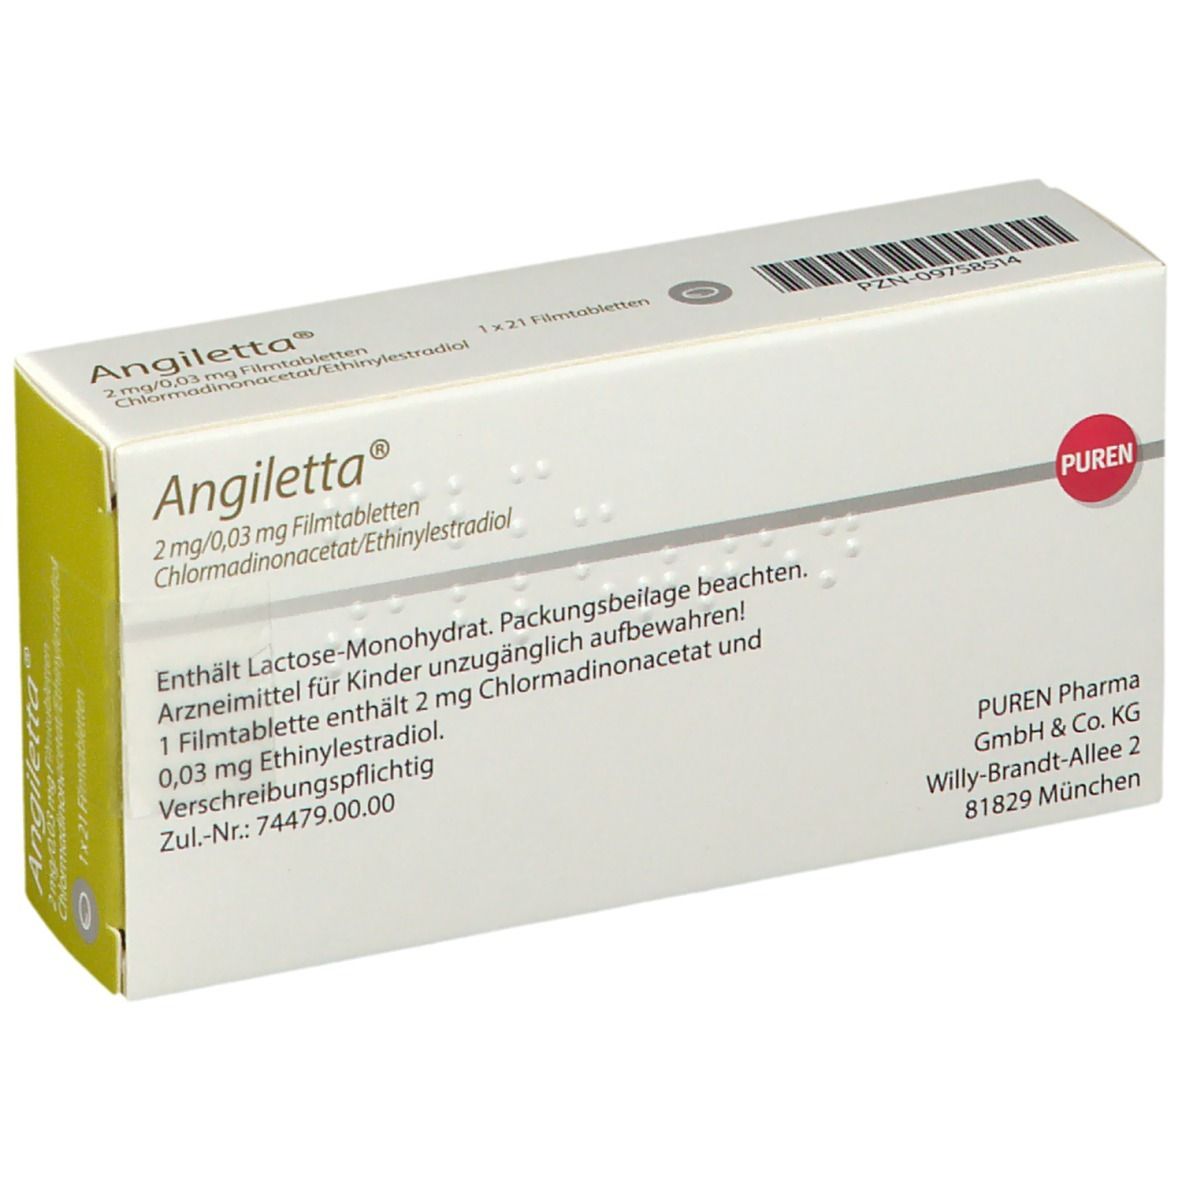 Angiletta™ 2 mg/0,03 mg